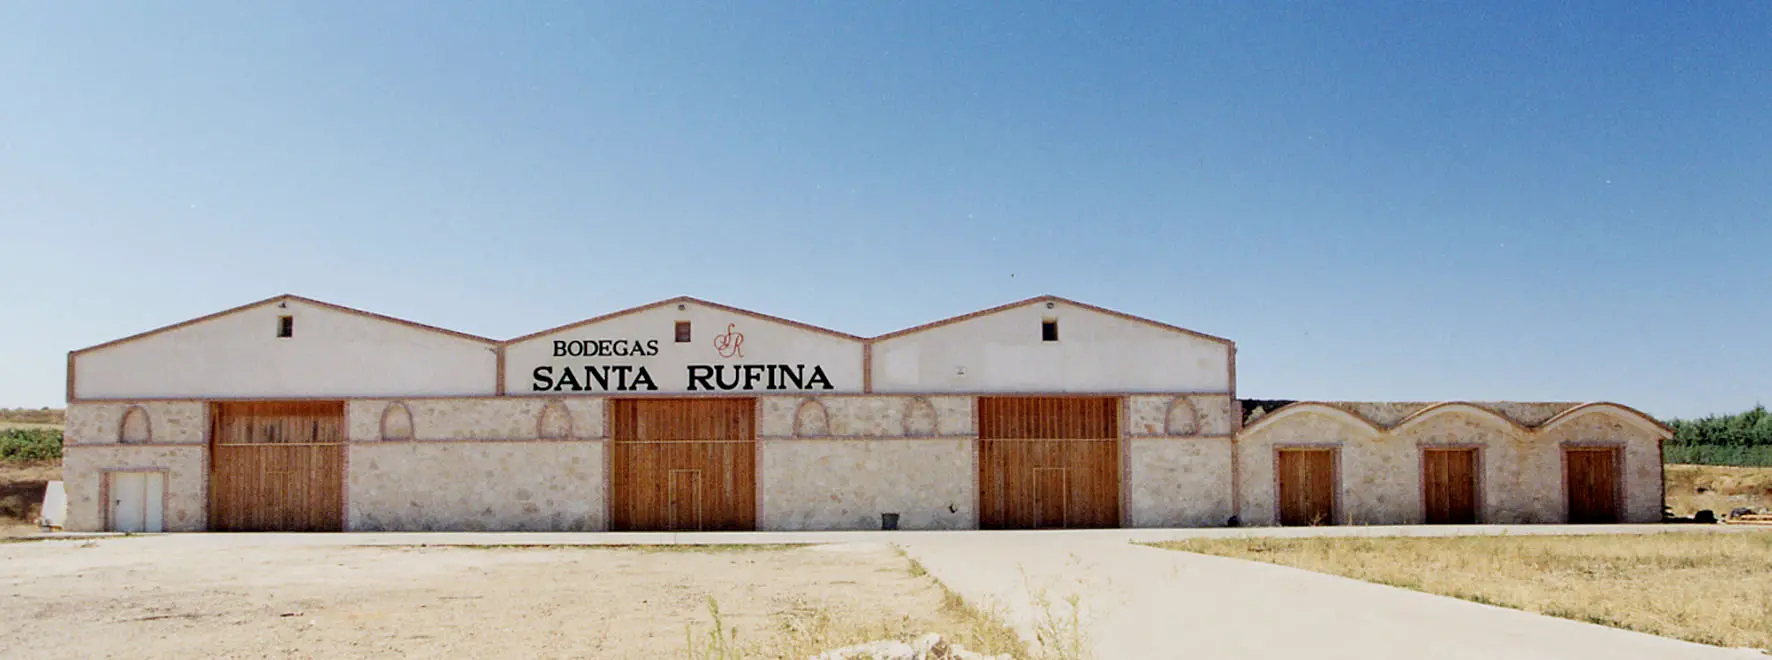 Bodegas Santa Rufina fachada.webp